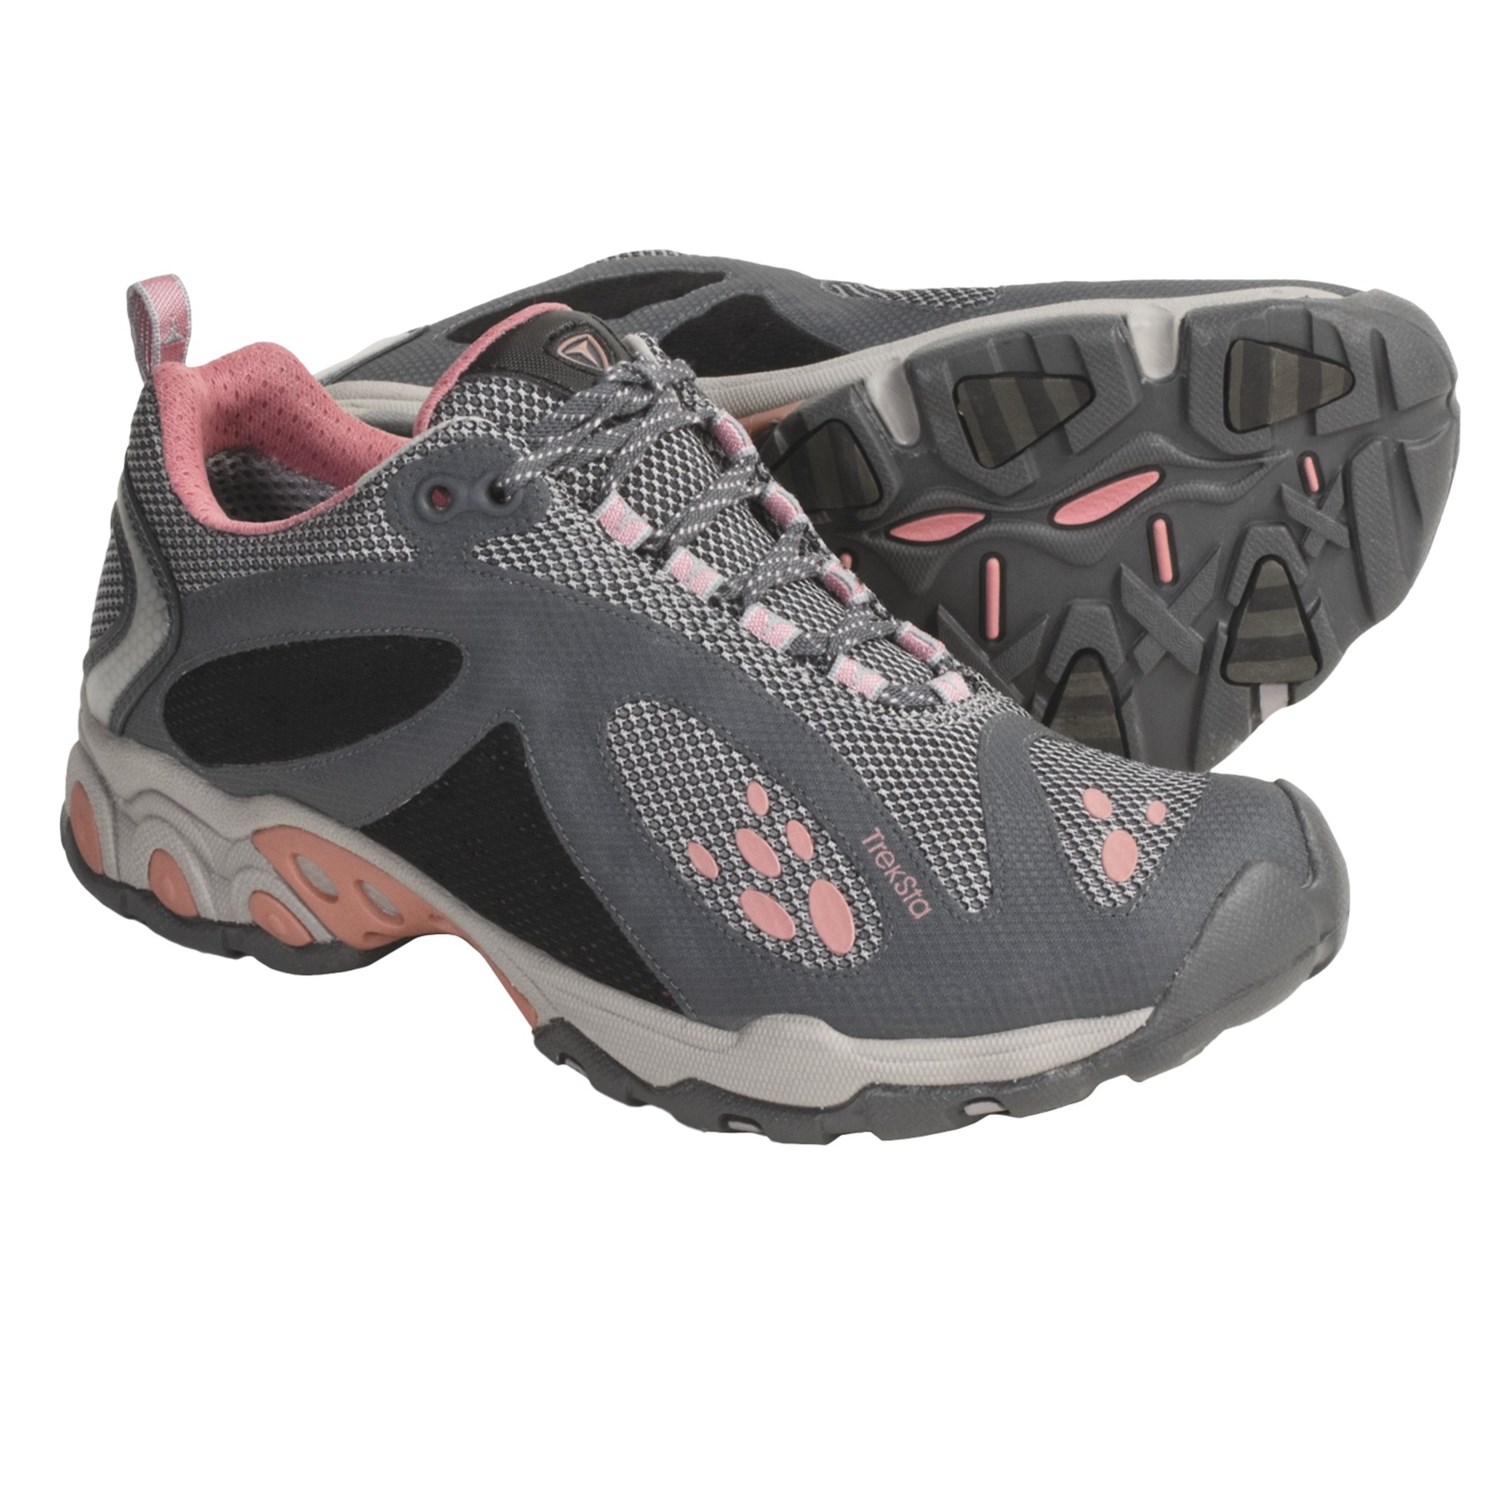 Treksta Evolution Trail Shoes (For Women) 3570T - Save 61%